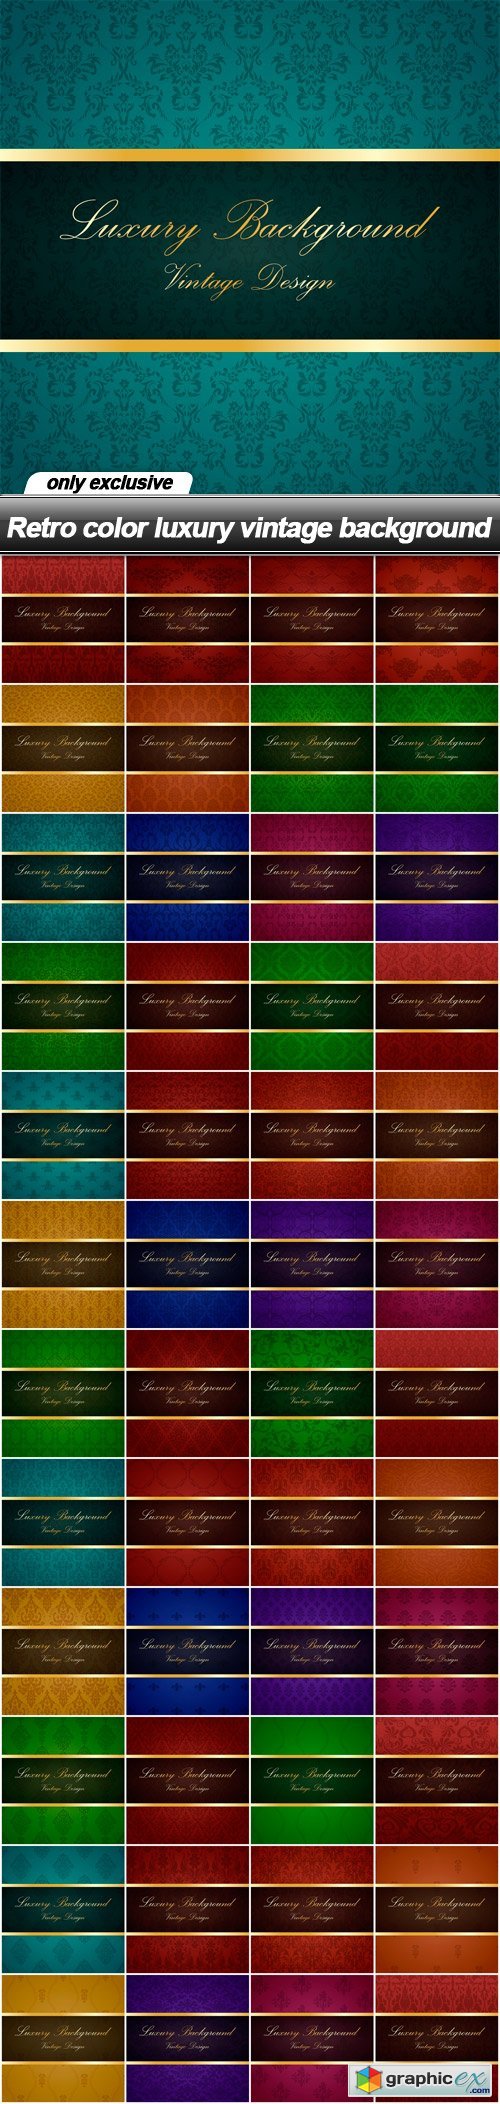 Retro color luxury vintage background - 47 EPS